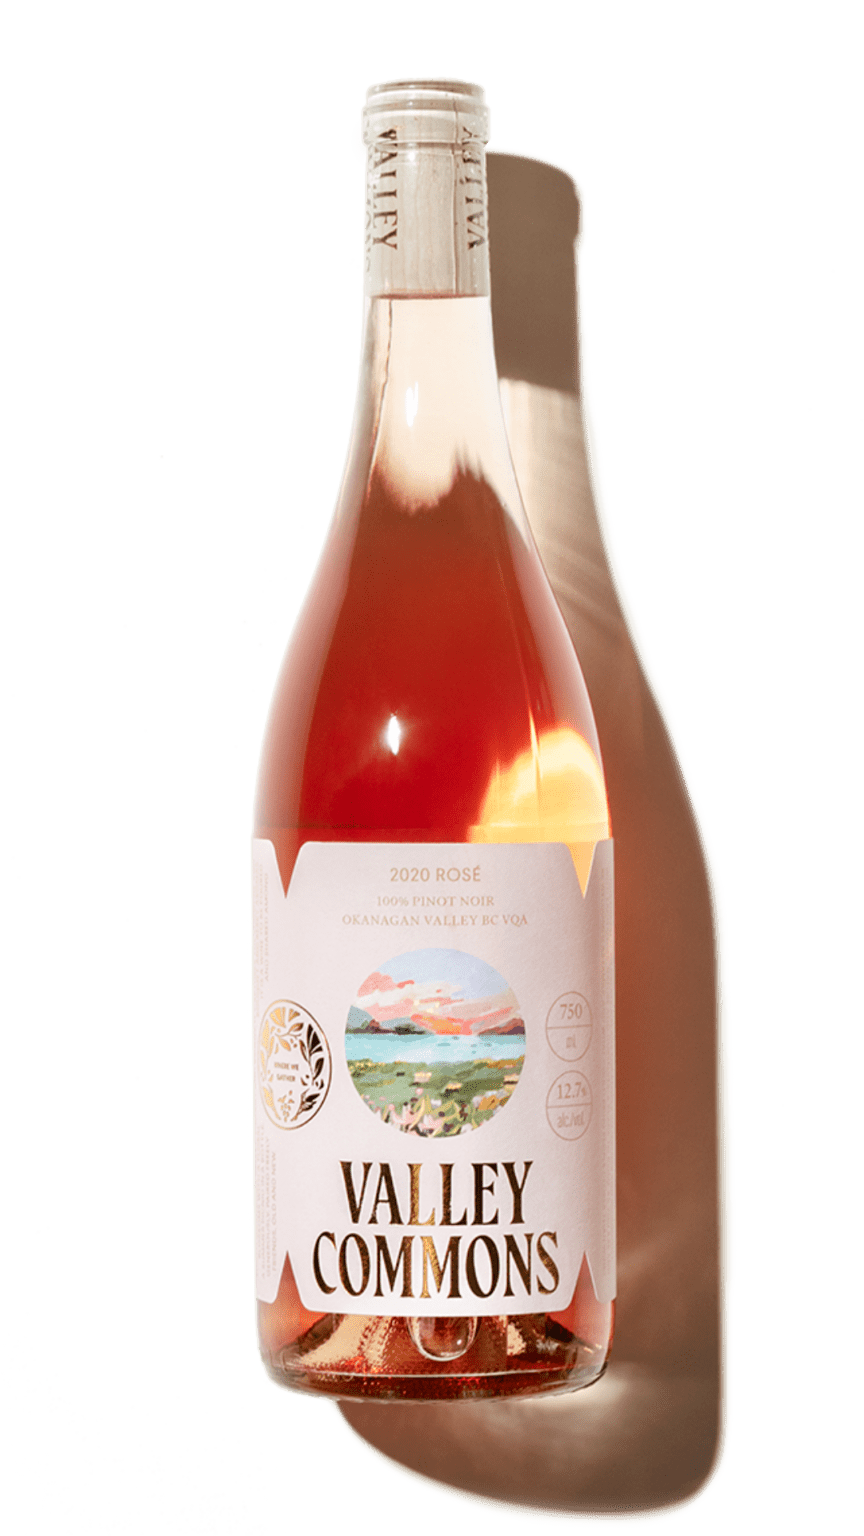 For wine, consider the Okanagan instead of Napa Valley - The Washington Post